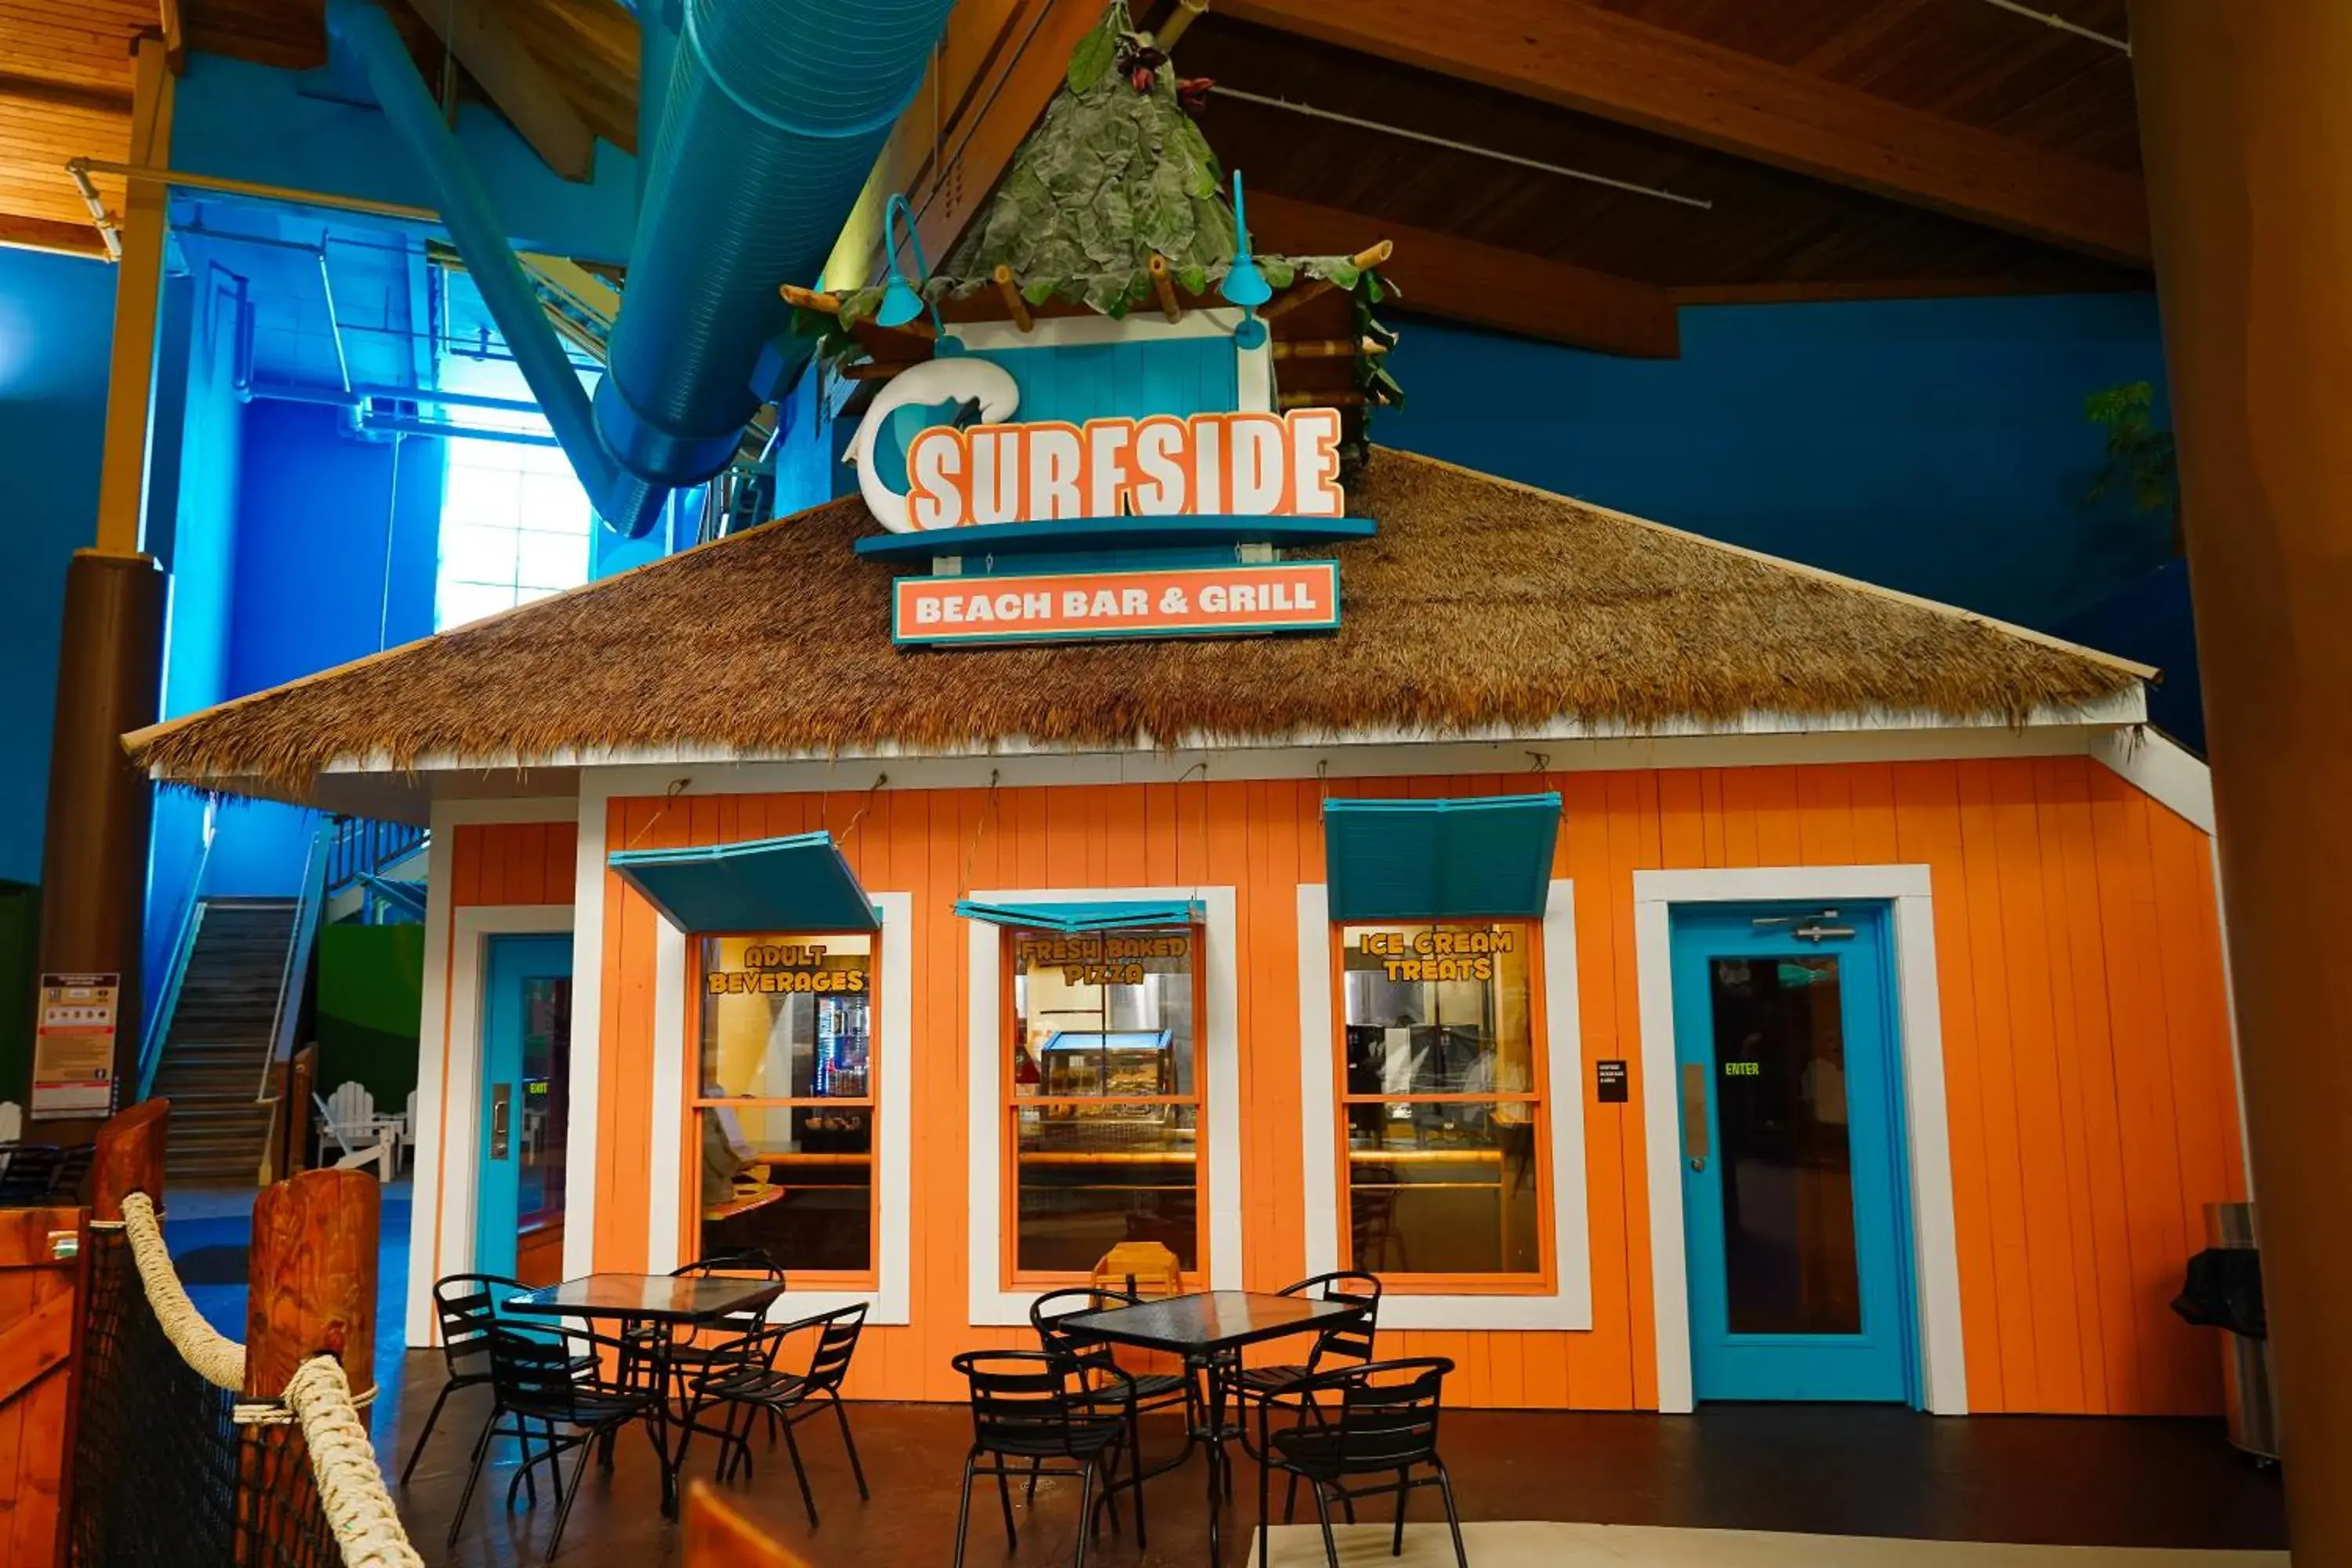 Restaurant/places to eat in Cedar Point Castaway Bay Indoor Water Park